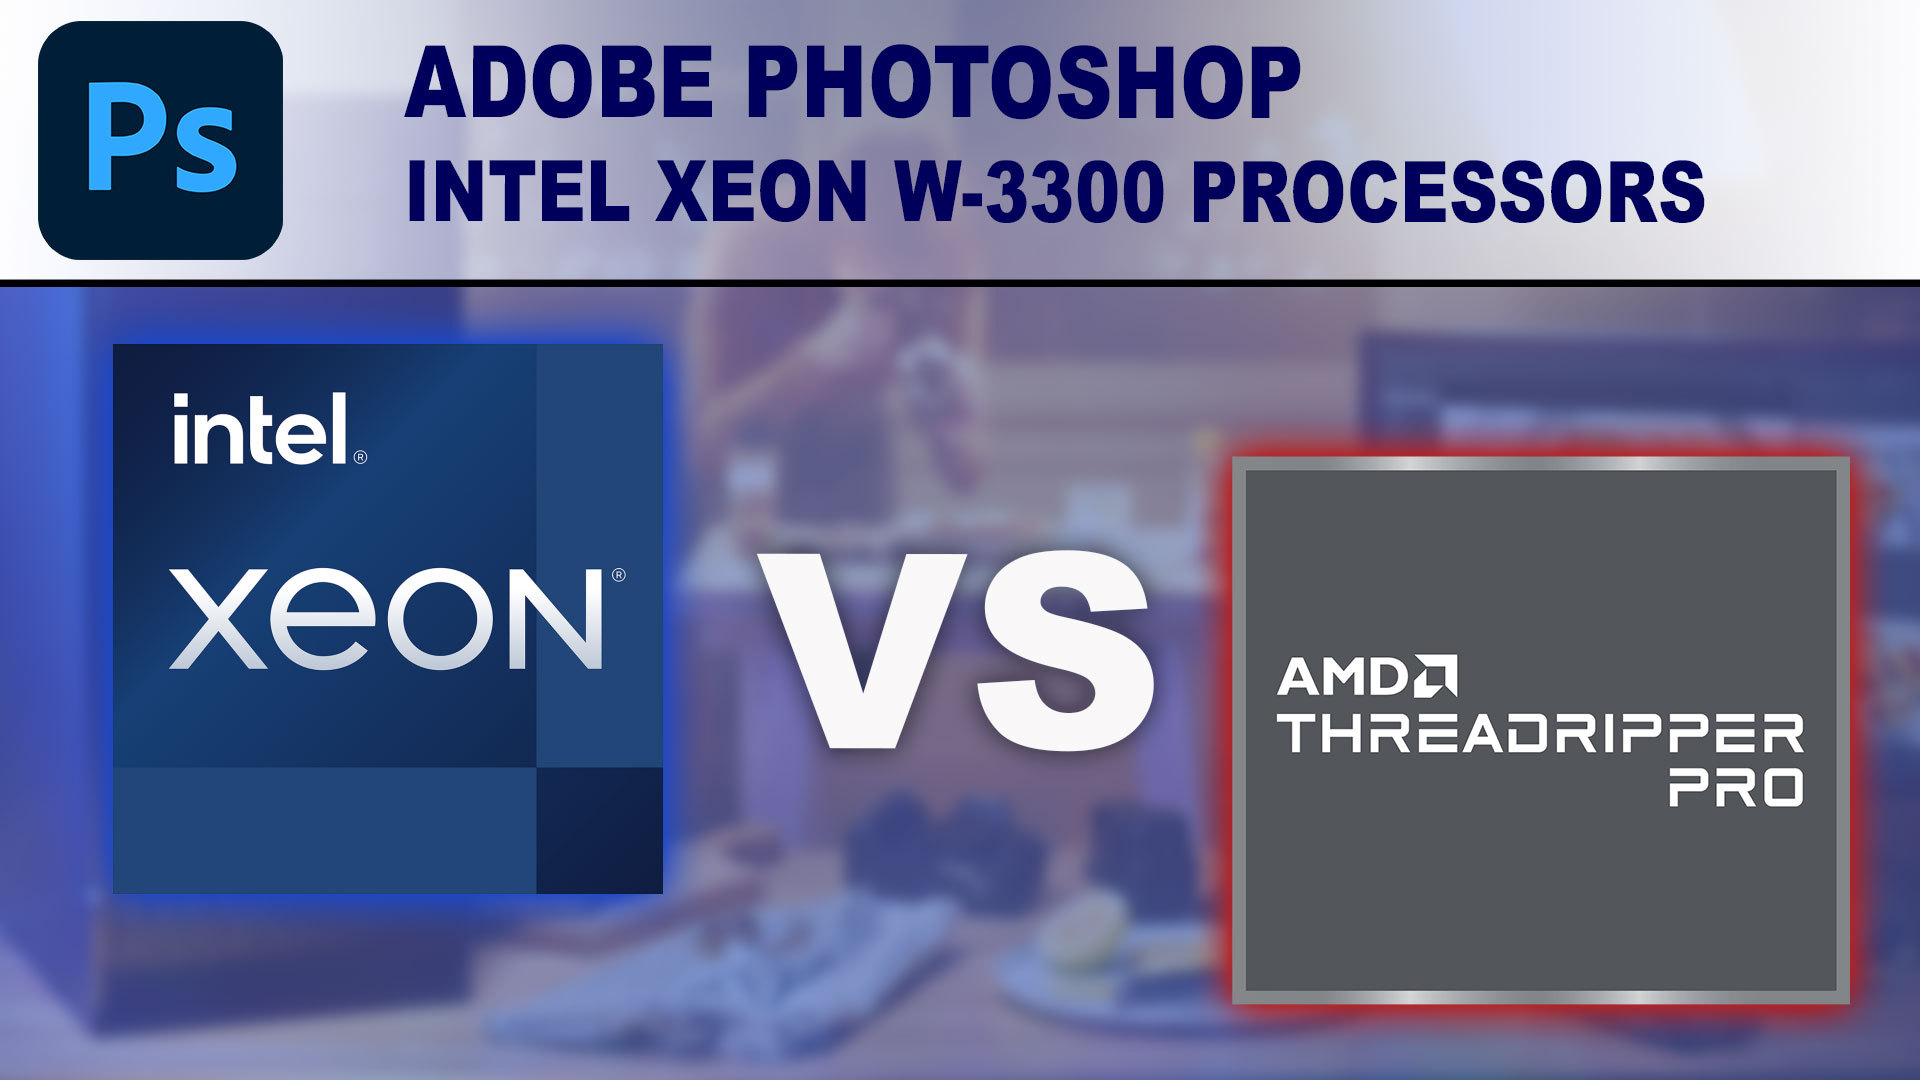 Intel Xeon W-3300 Processors for Photoshop